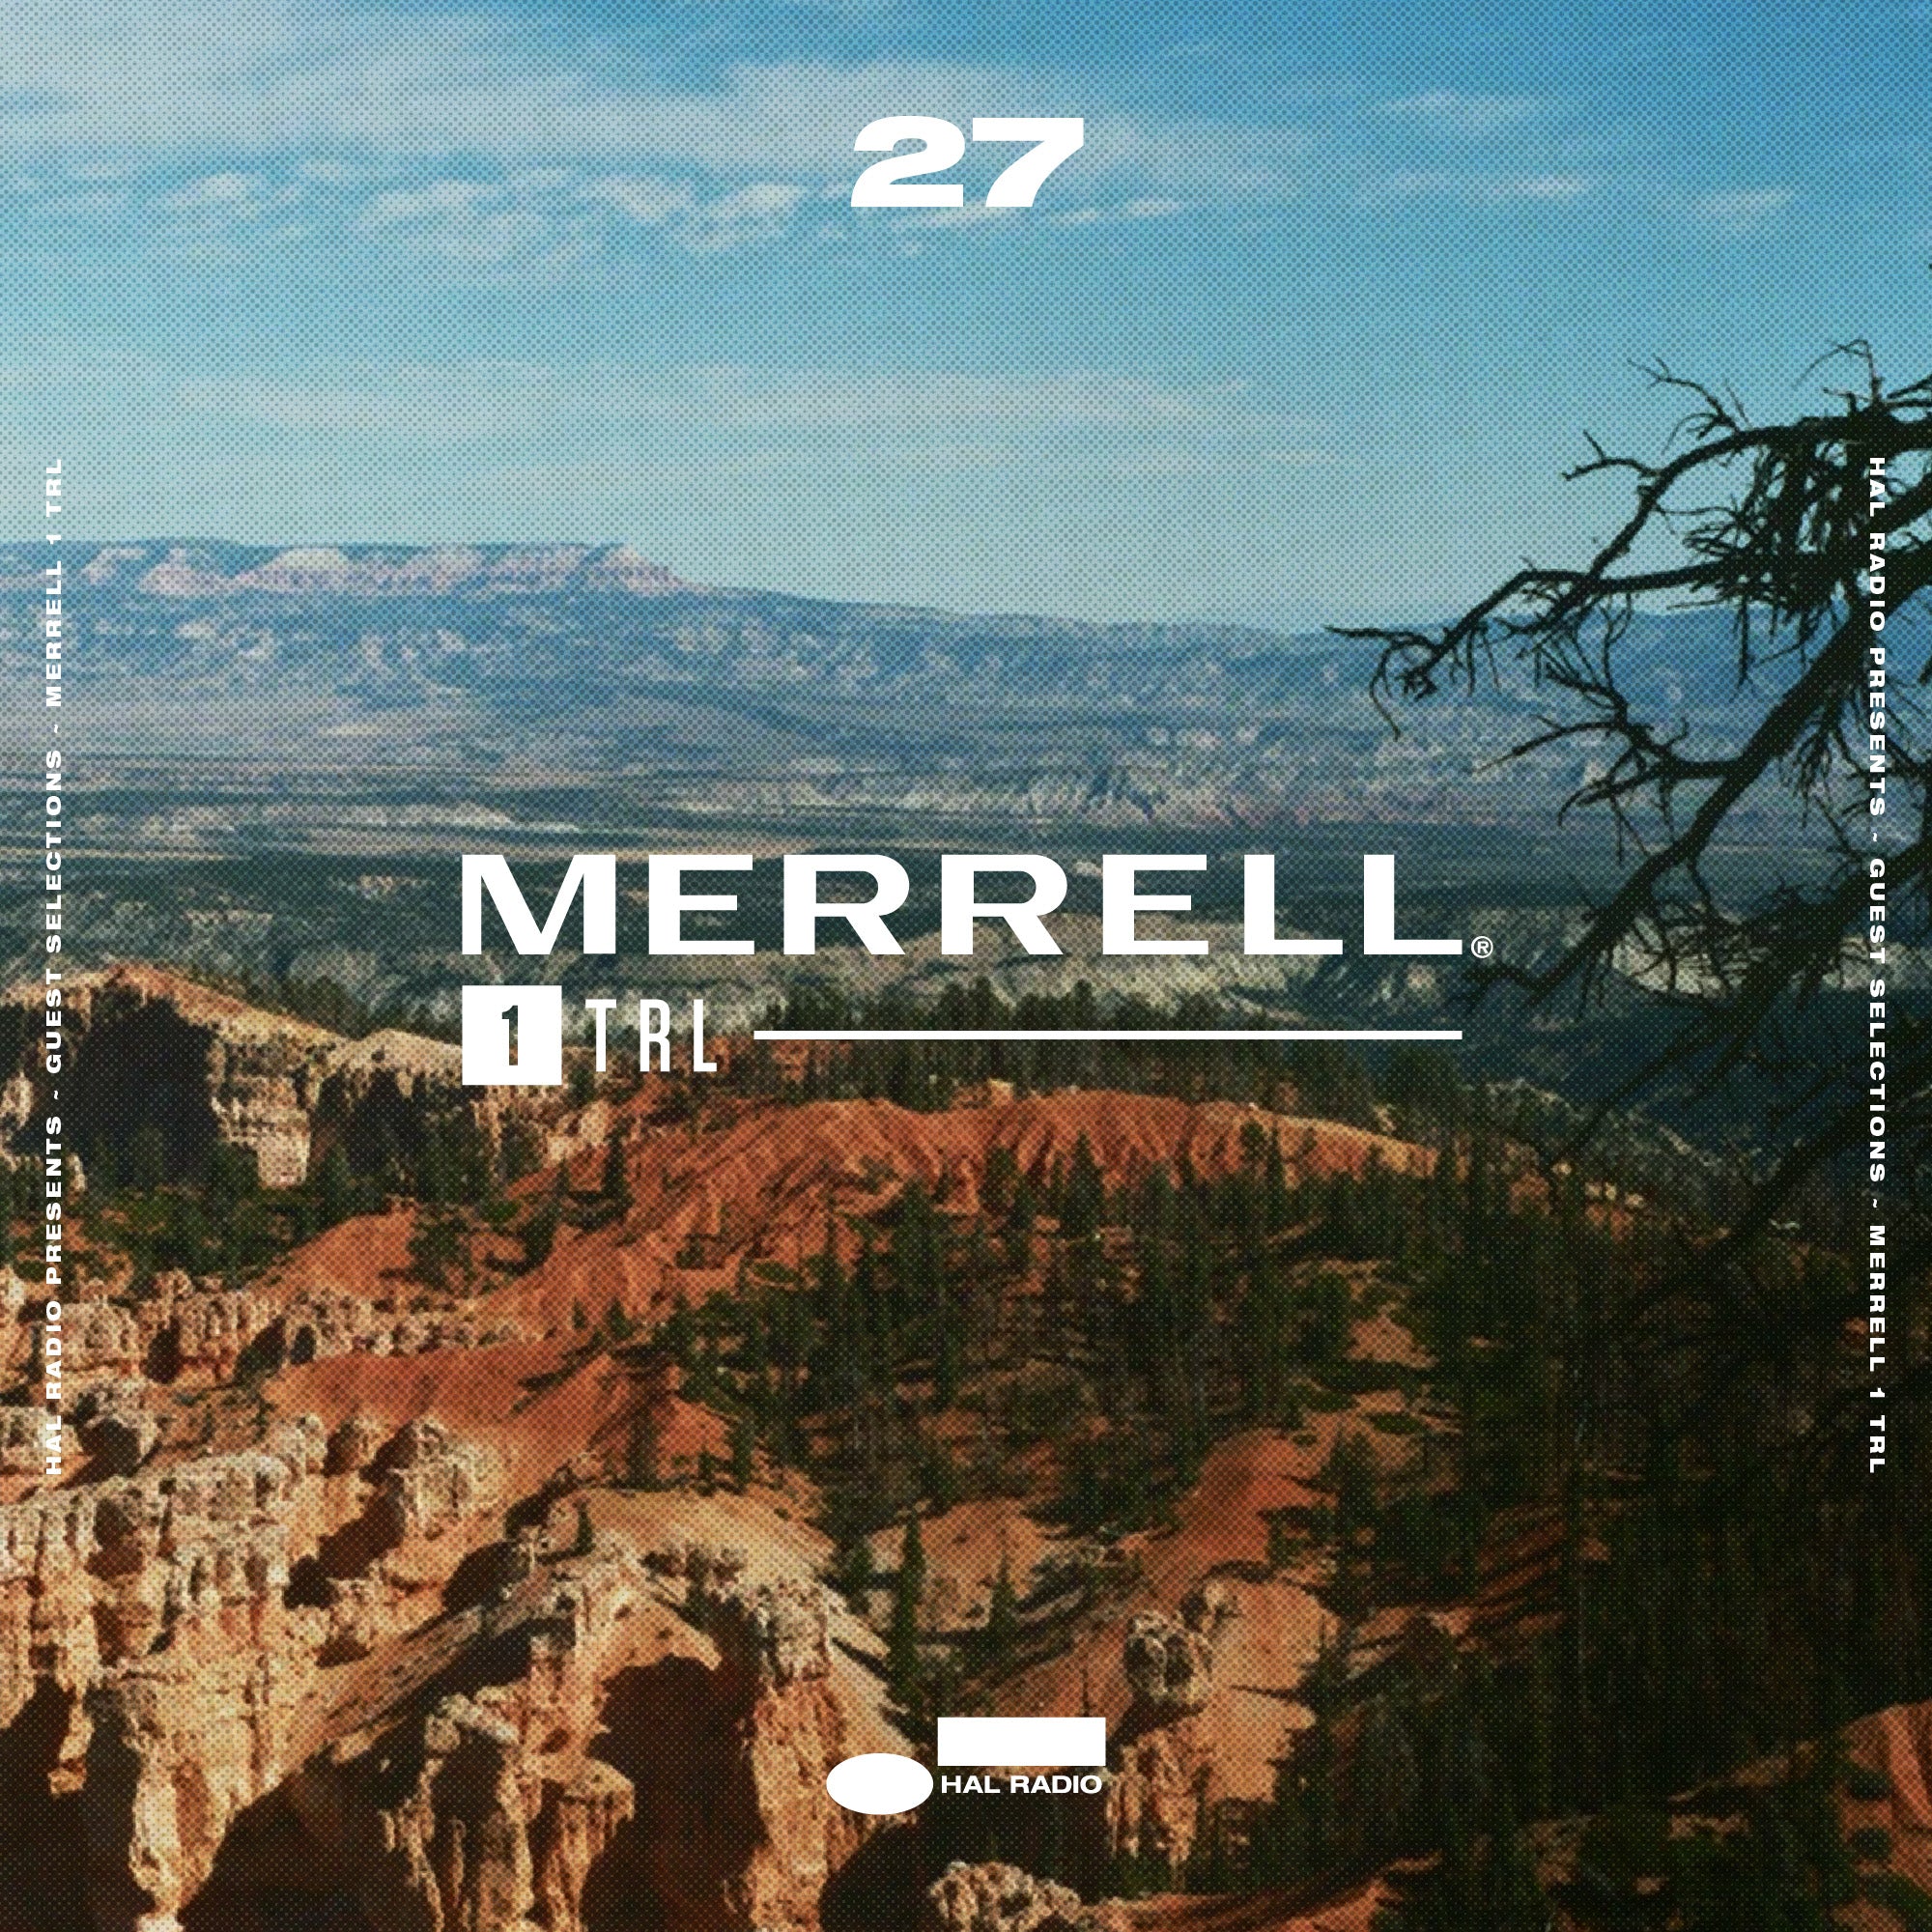 HAL RADIO | EPISODE 27* | MERRELL 1 TRL